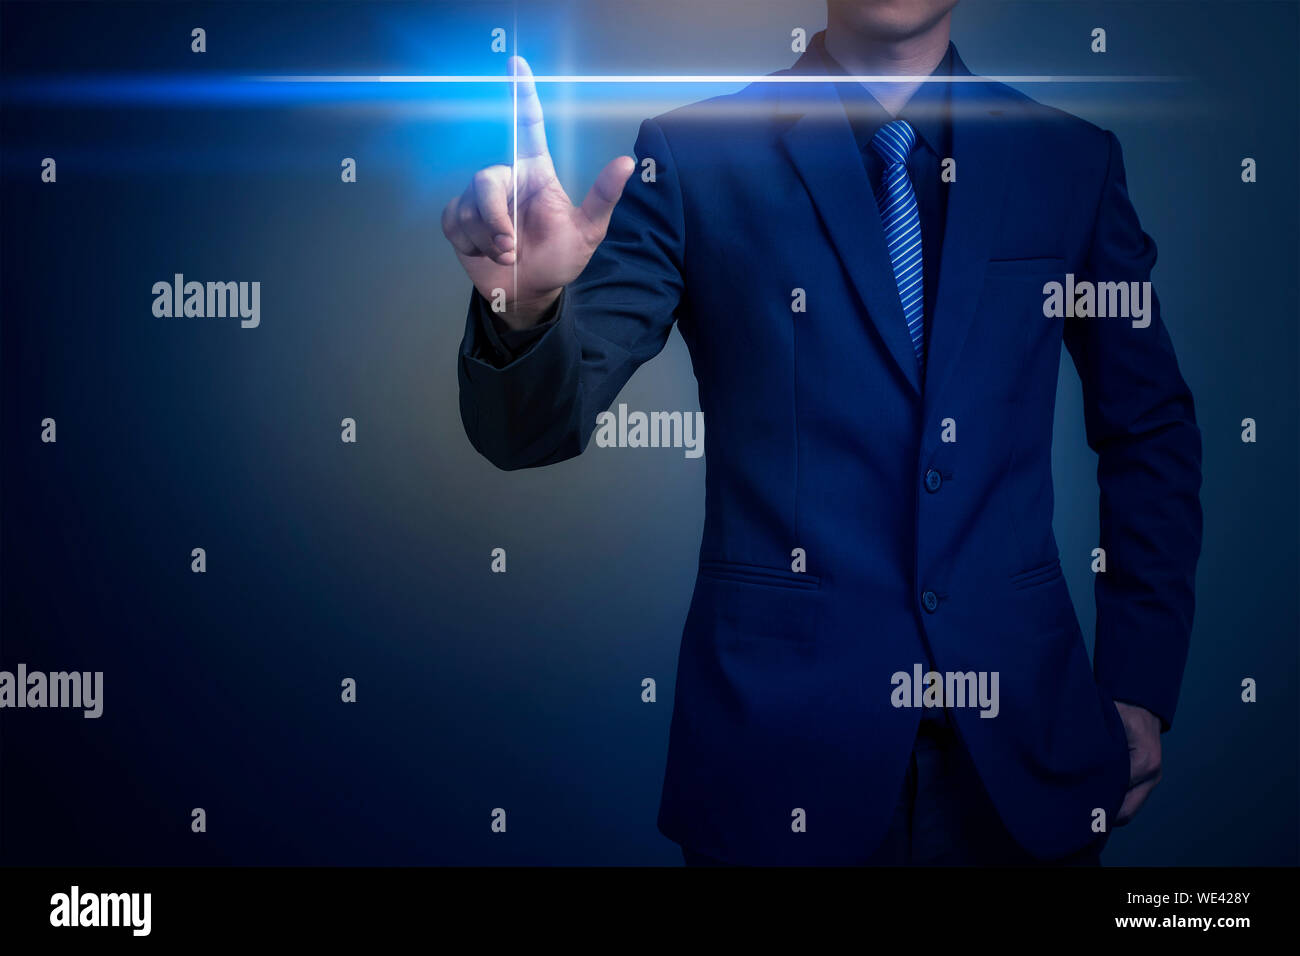 Digital Composite Image Of Businessman Using Interface Stock Photo